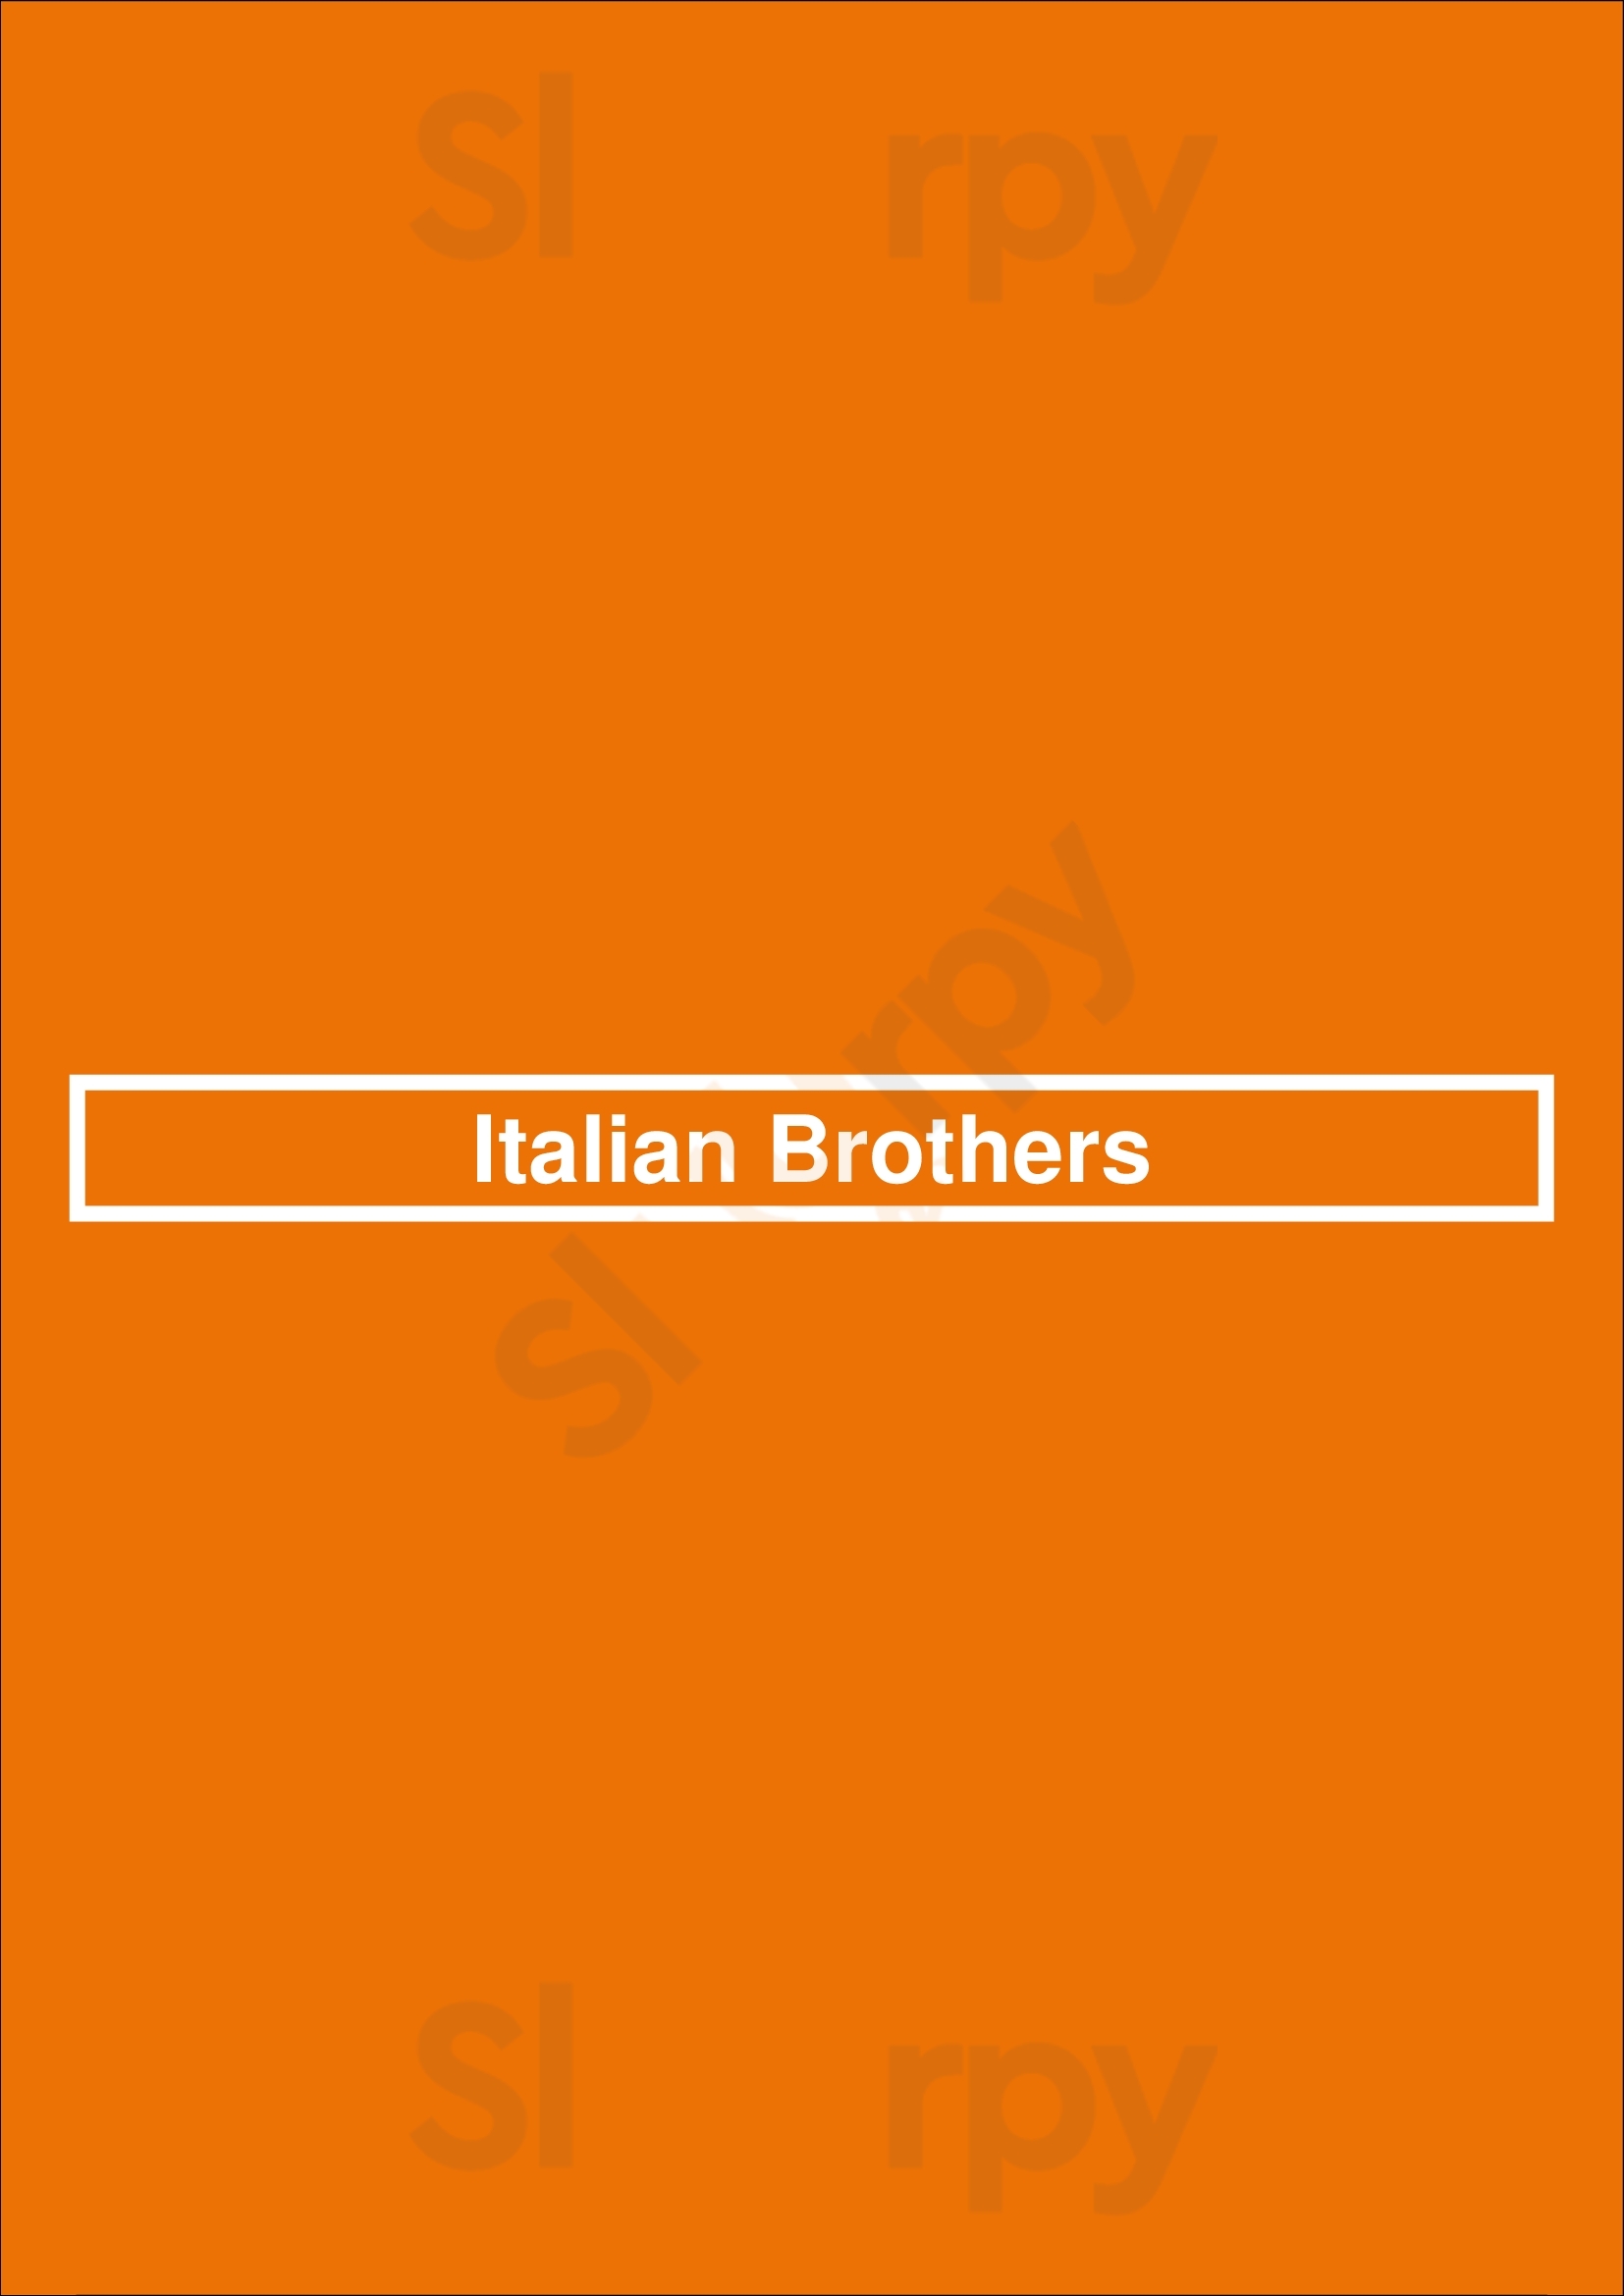 Italian Brothers San Jose Menu - 1